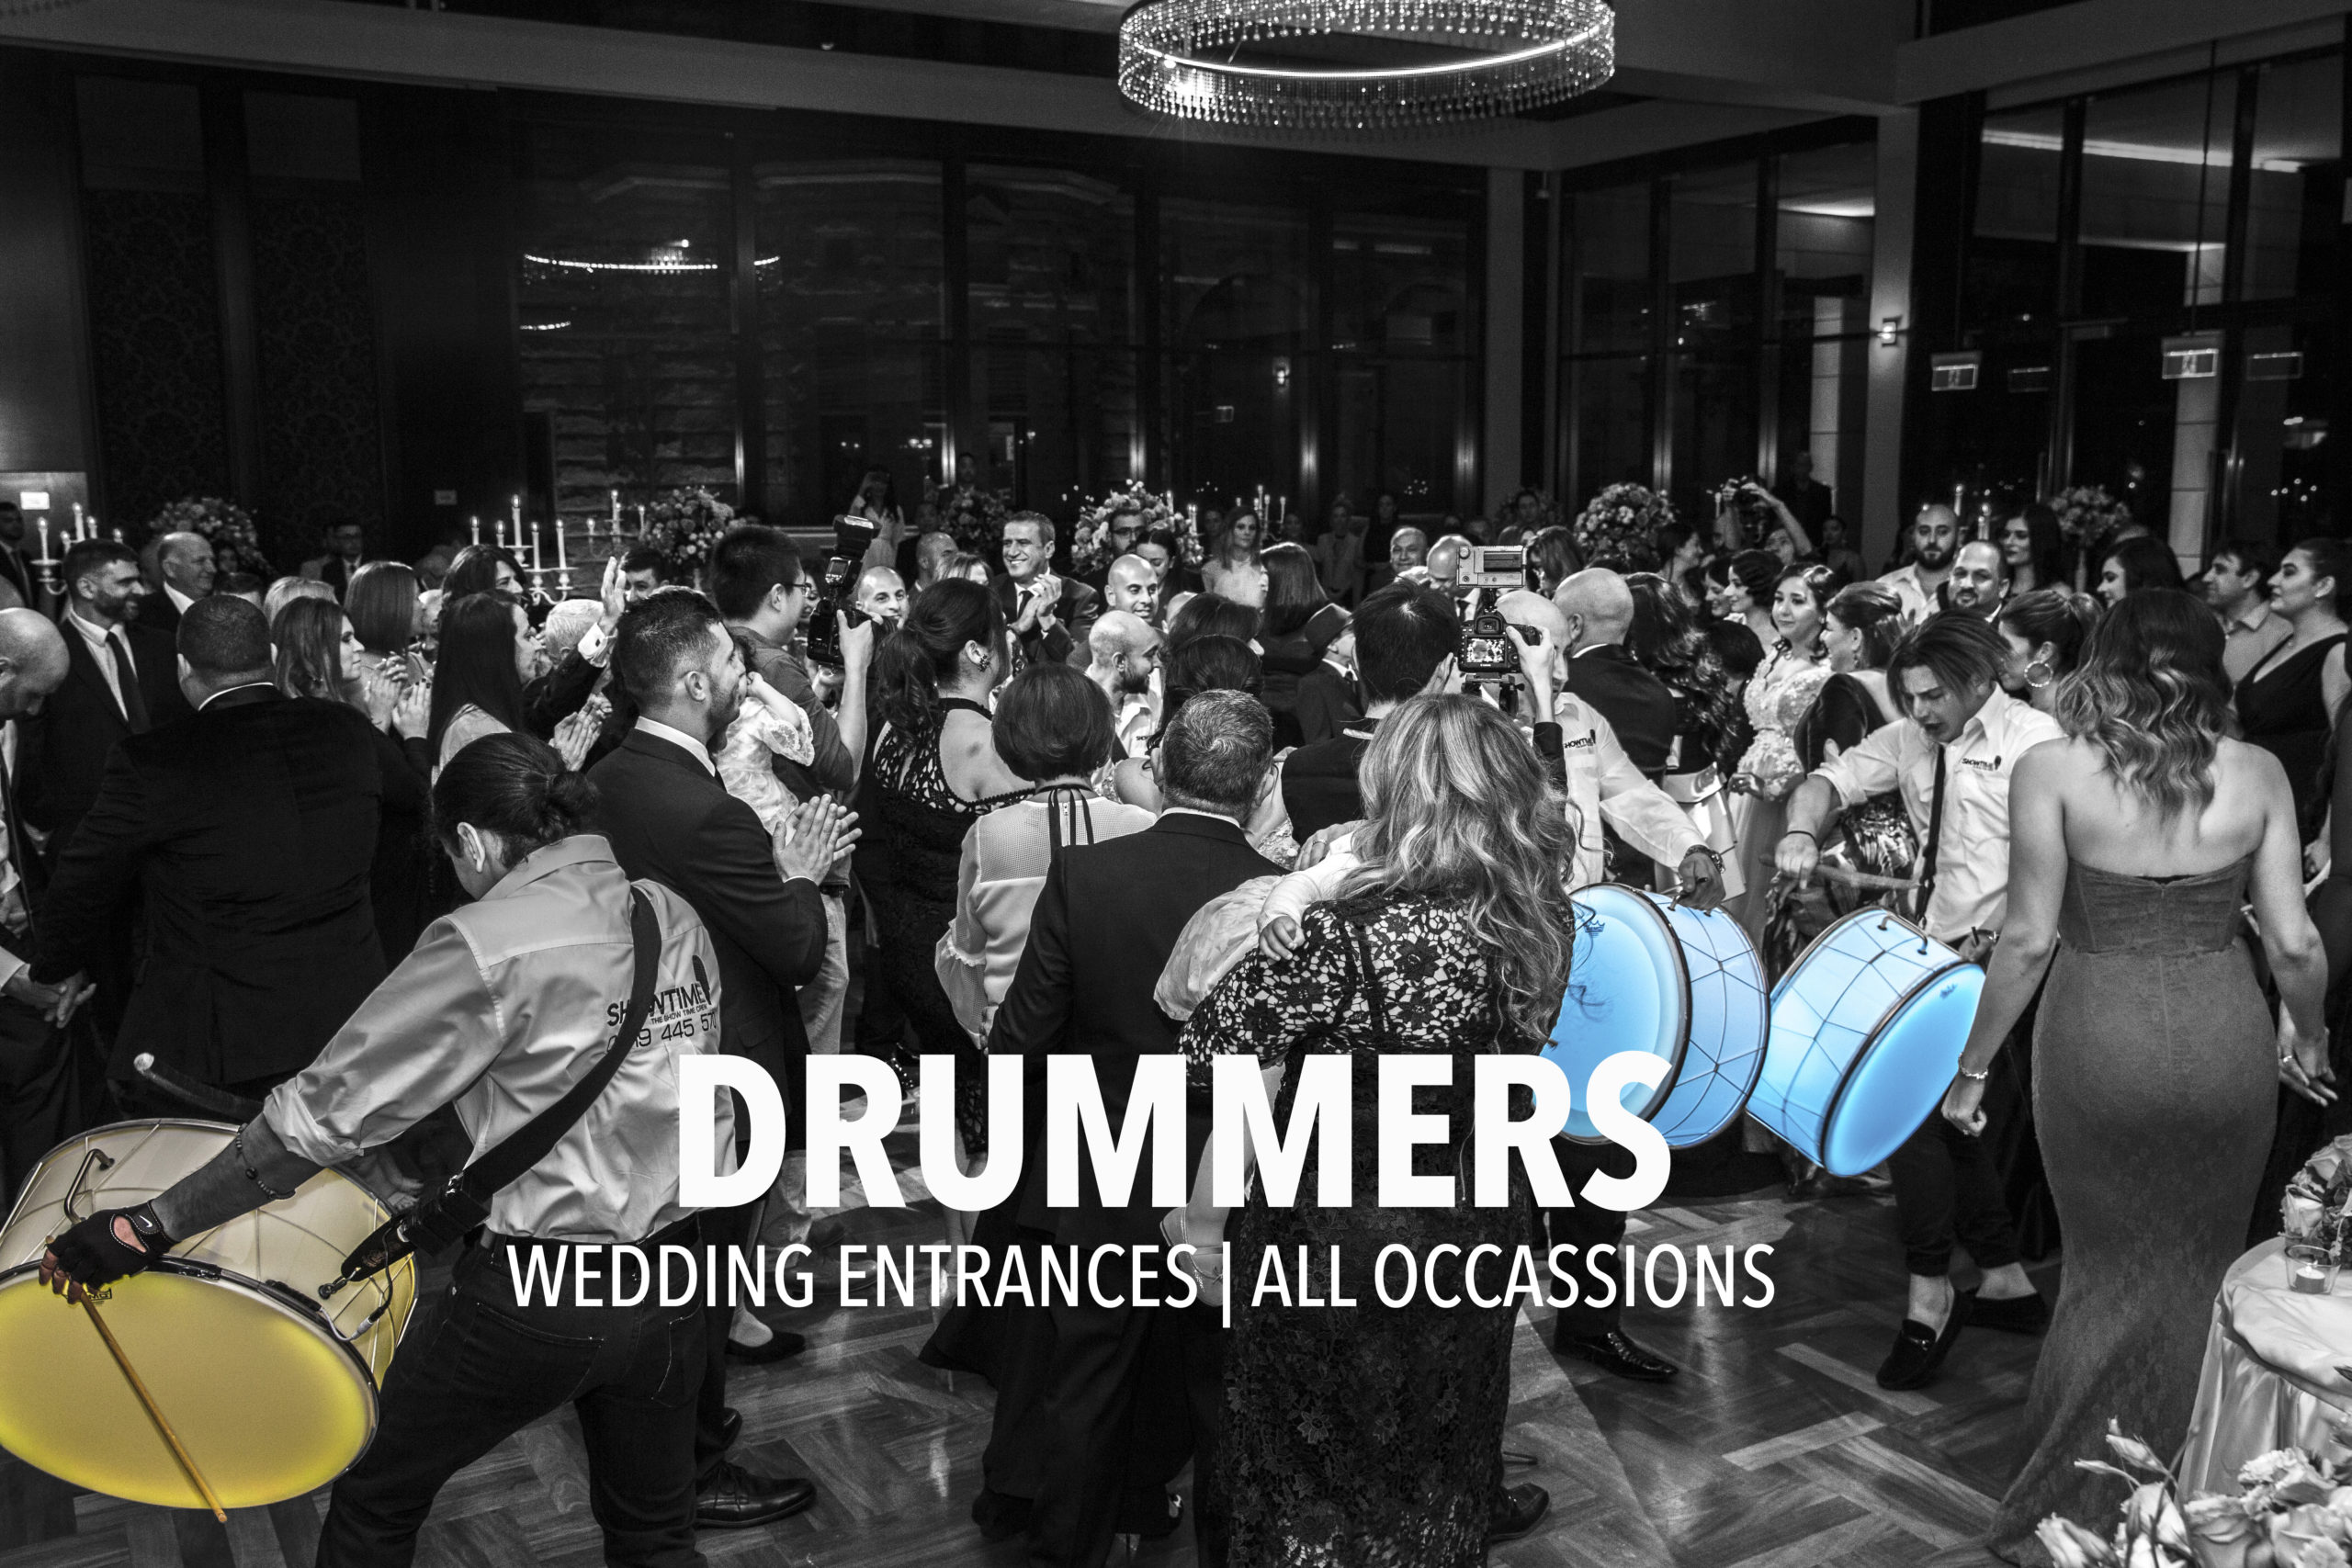 Wedding Drummers hire sydney